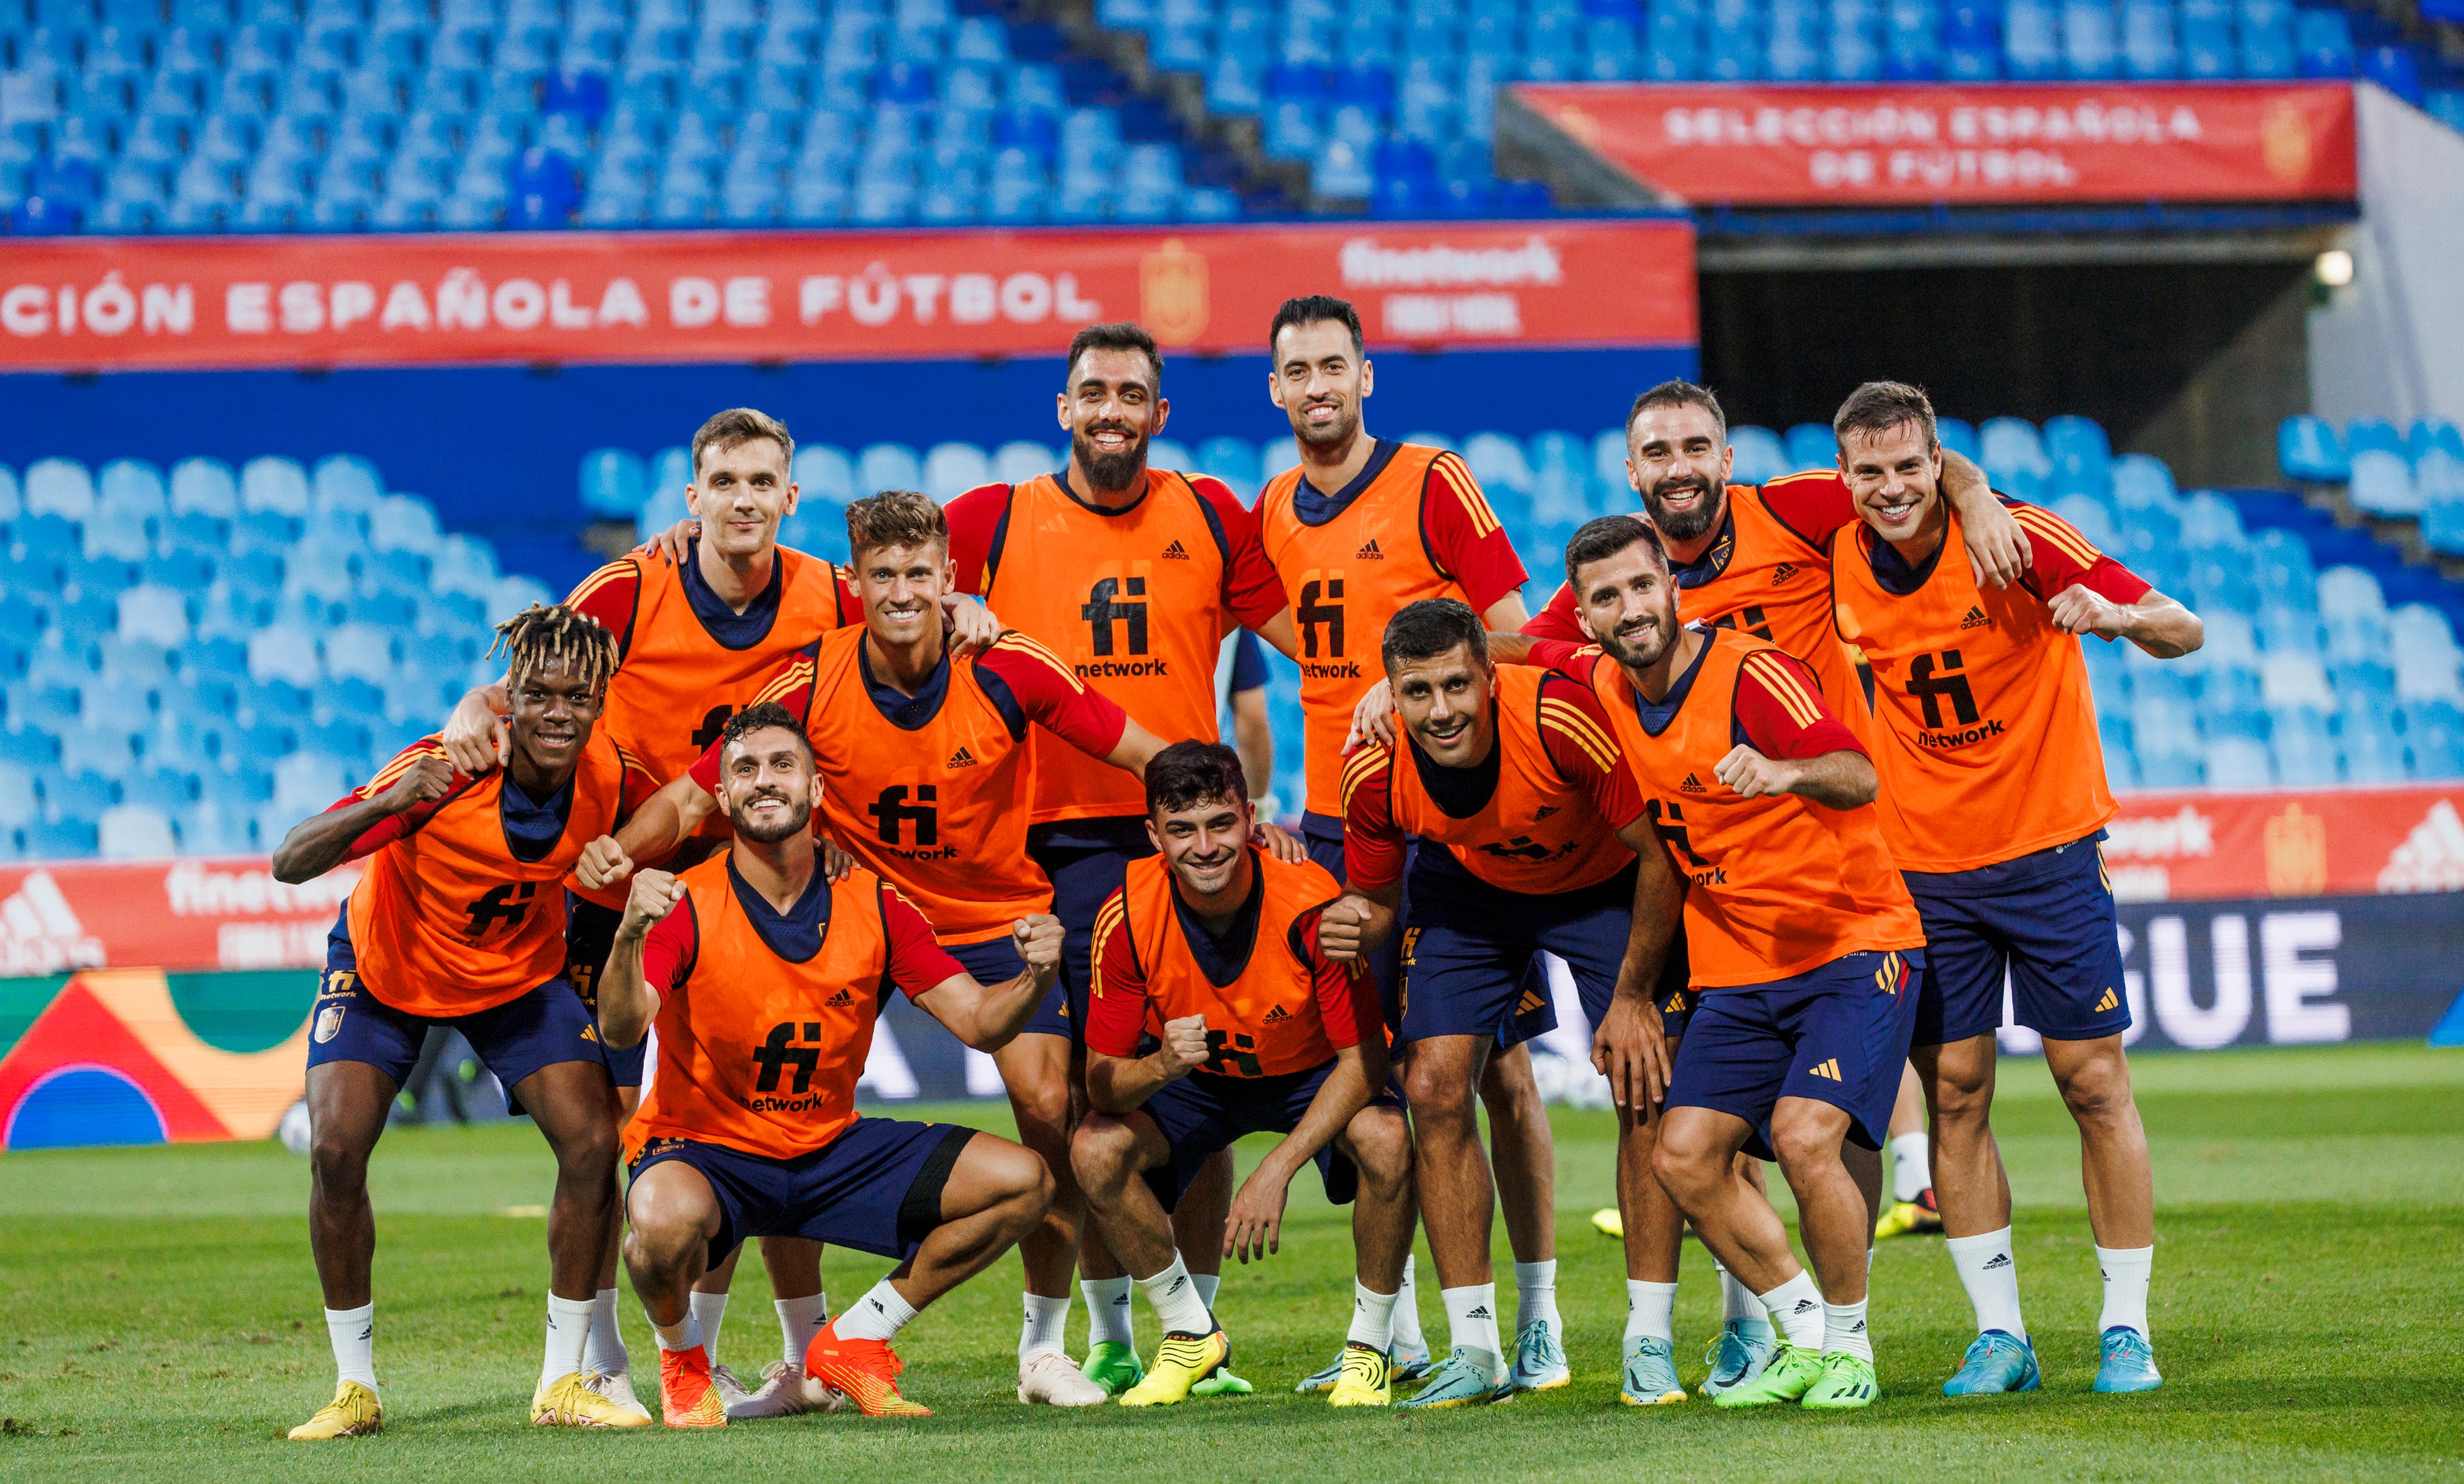 Selección Española de Fútbol on Twitter: "📸 Y por supuesto 𝚙𝚘𝚍𝚒́𝚊 #VamosEspaña | #NationsLeague https://t.co/kAbZnzSyUe" / Twitter